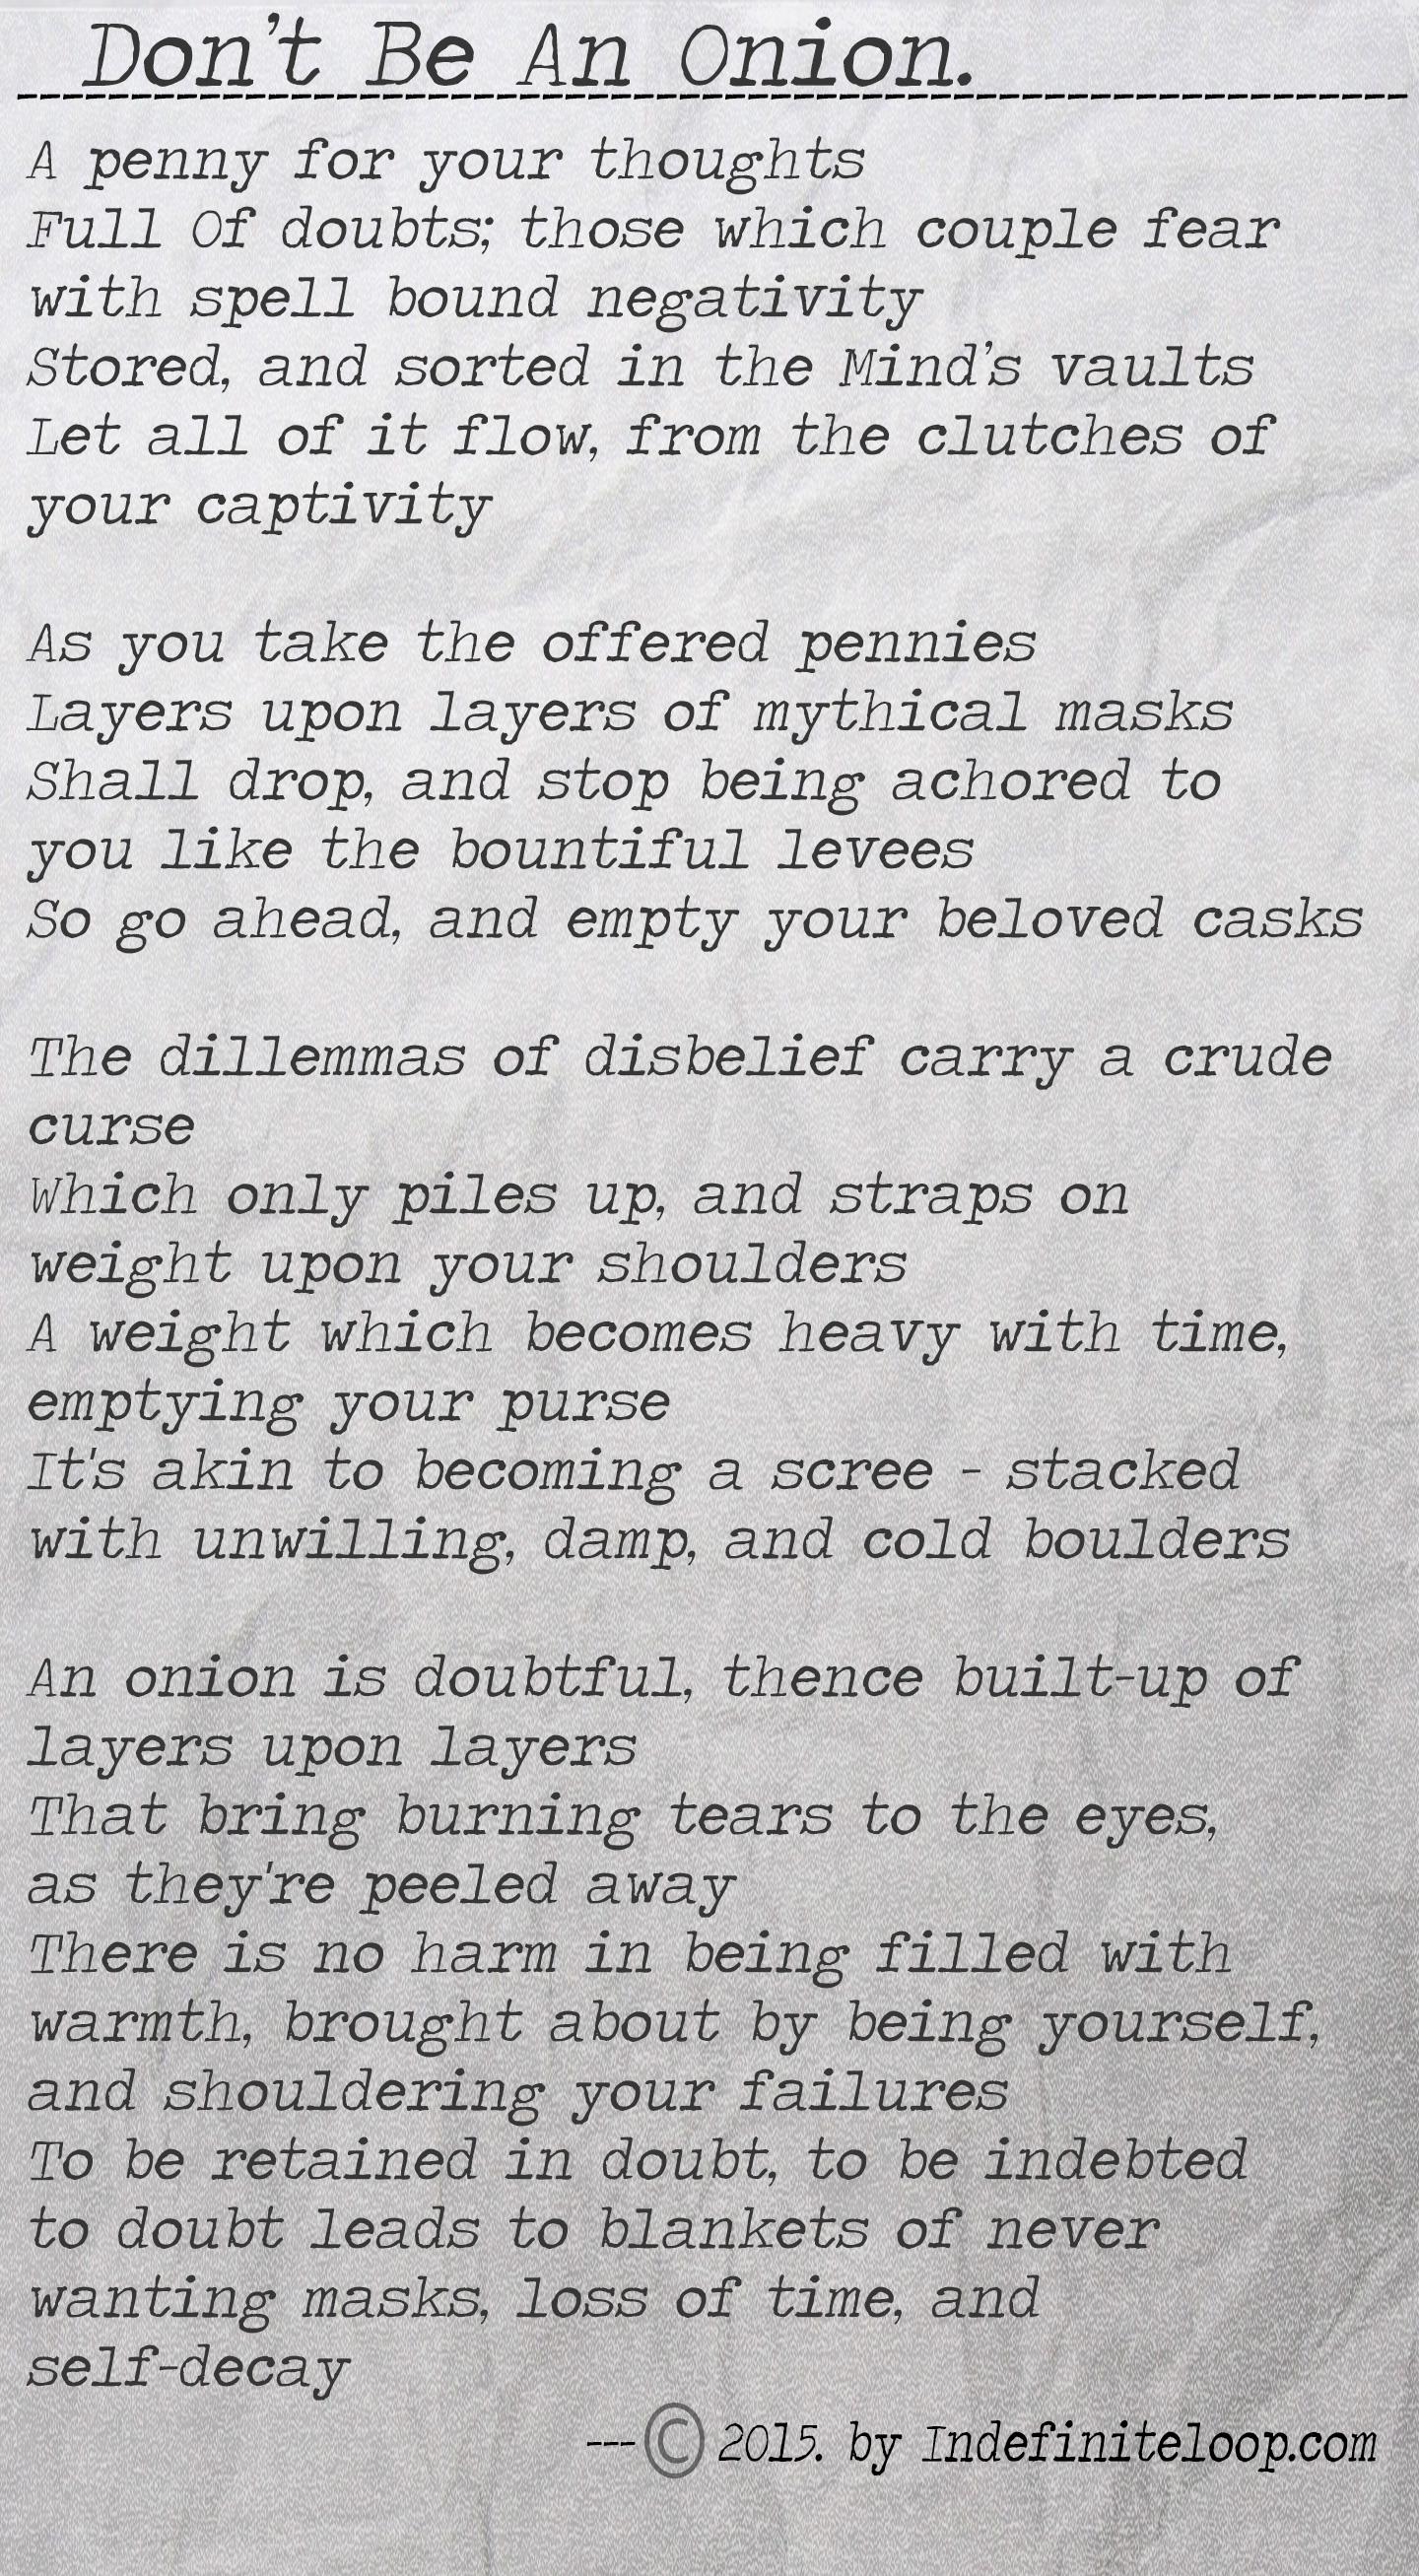 Don't Be An Onion - Poem - Copyright indefiniteloop.com